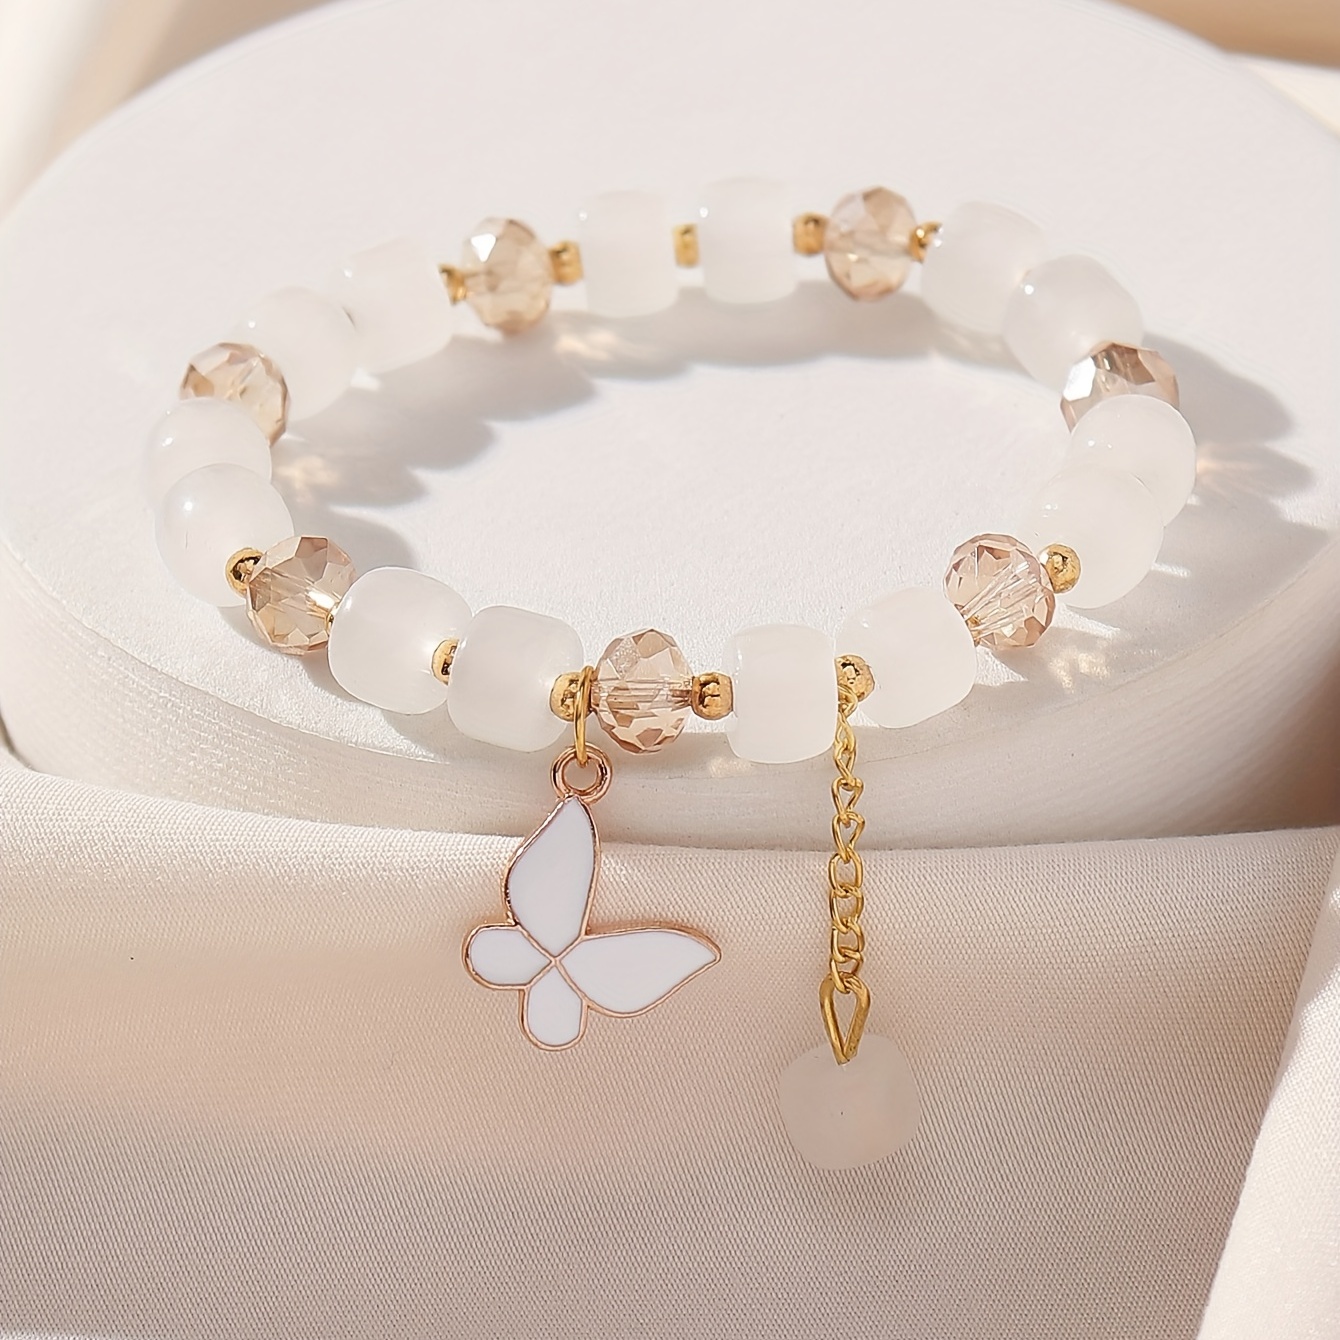 Gold Bracelet Jewelry Design Girls